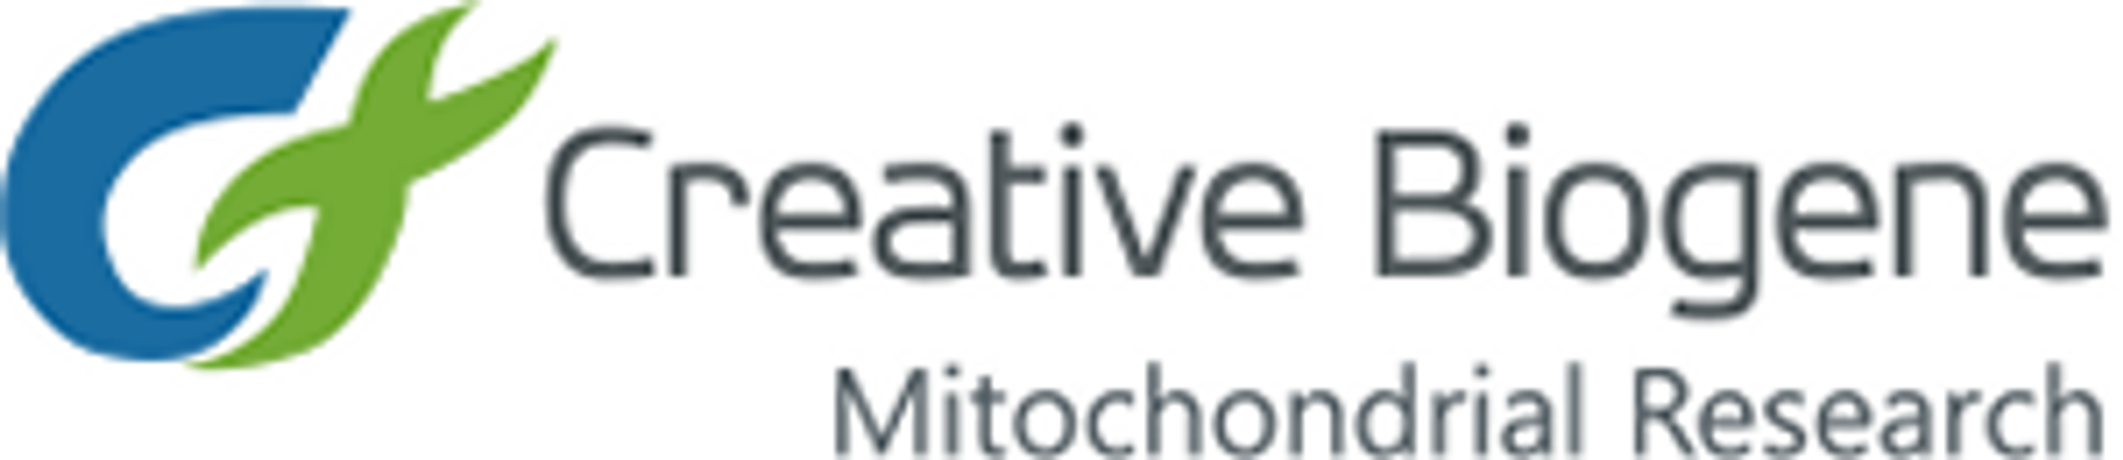 Creative Biogene - Neurodegeneration-Related Mitochondria Studies